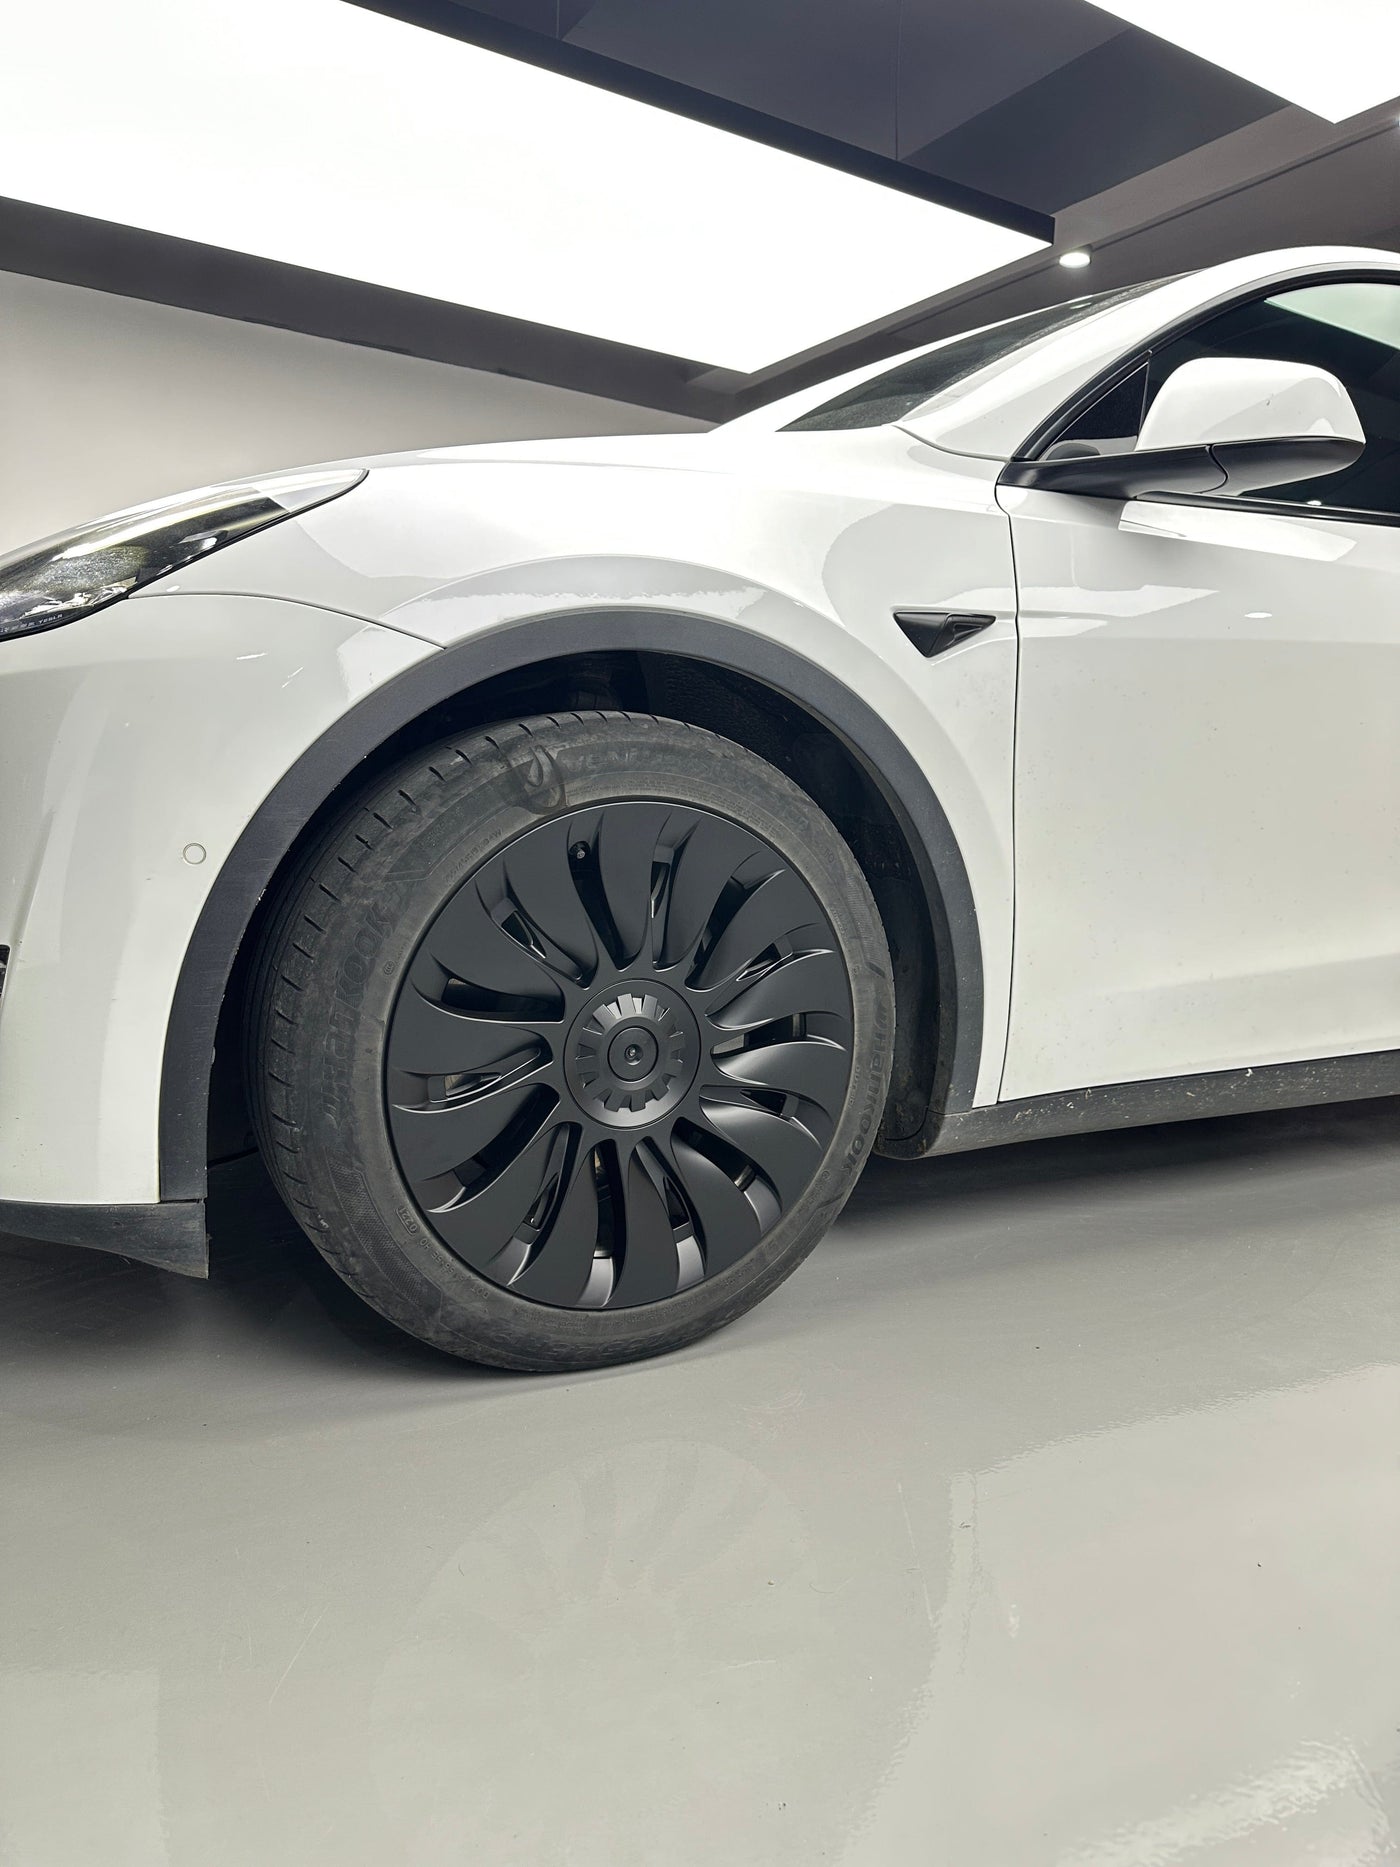 Car 19 Wheel Cover Hubcaps Rim Cover For Tesla Model Y 2020-2023 Matte  Black